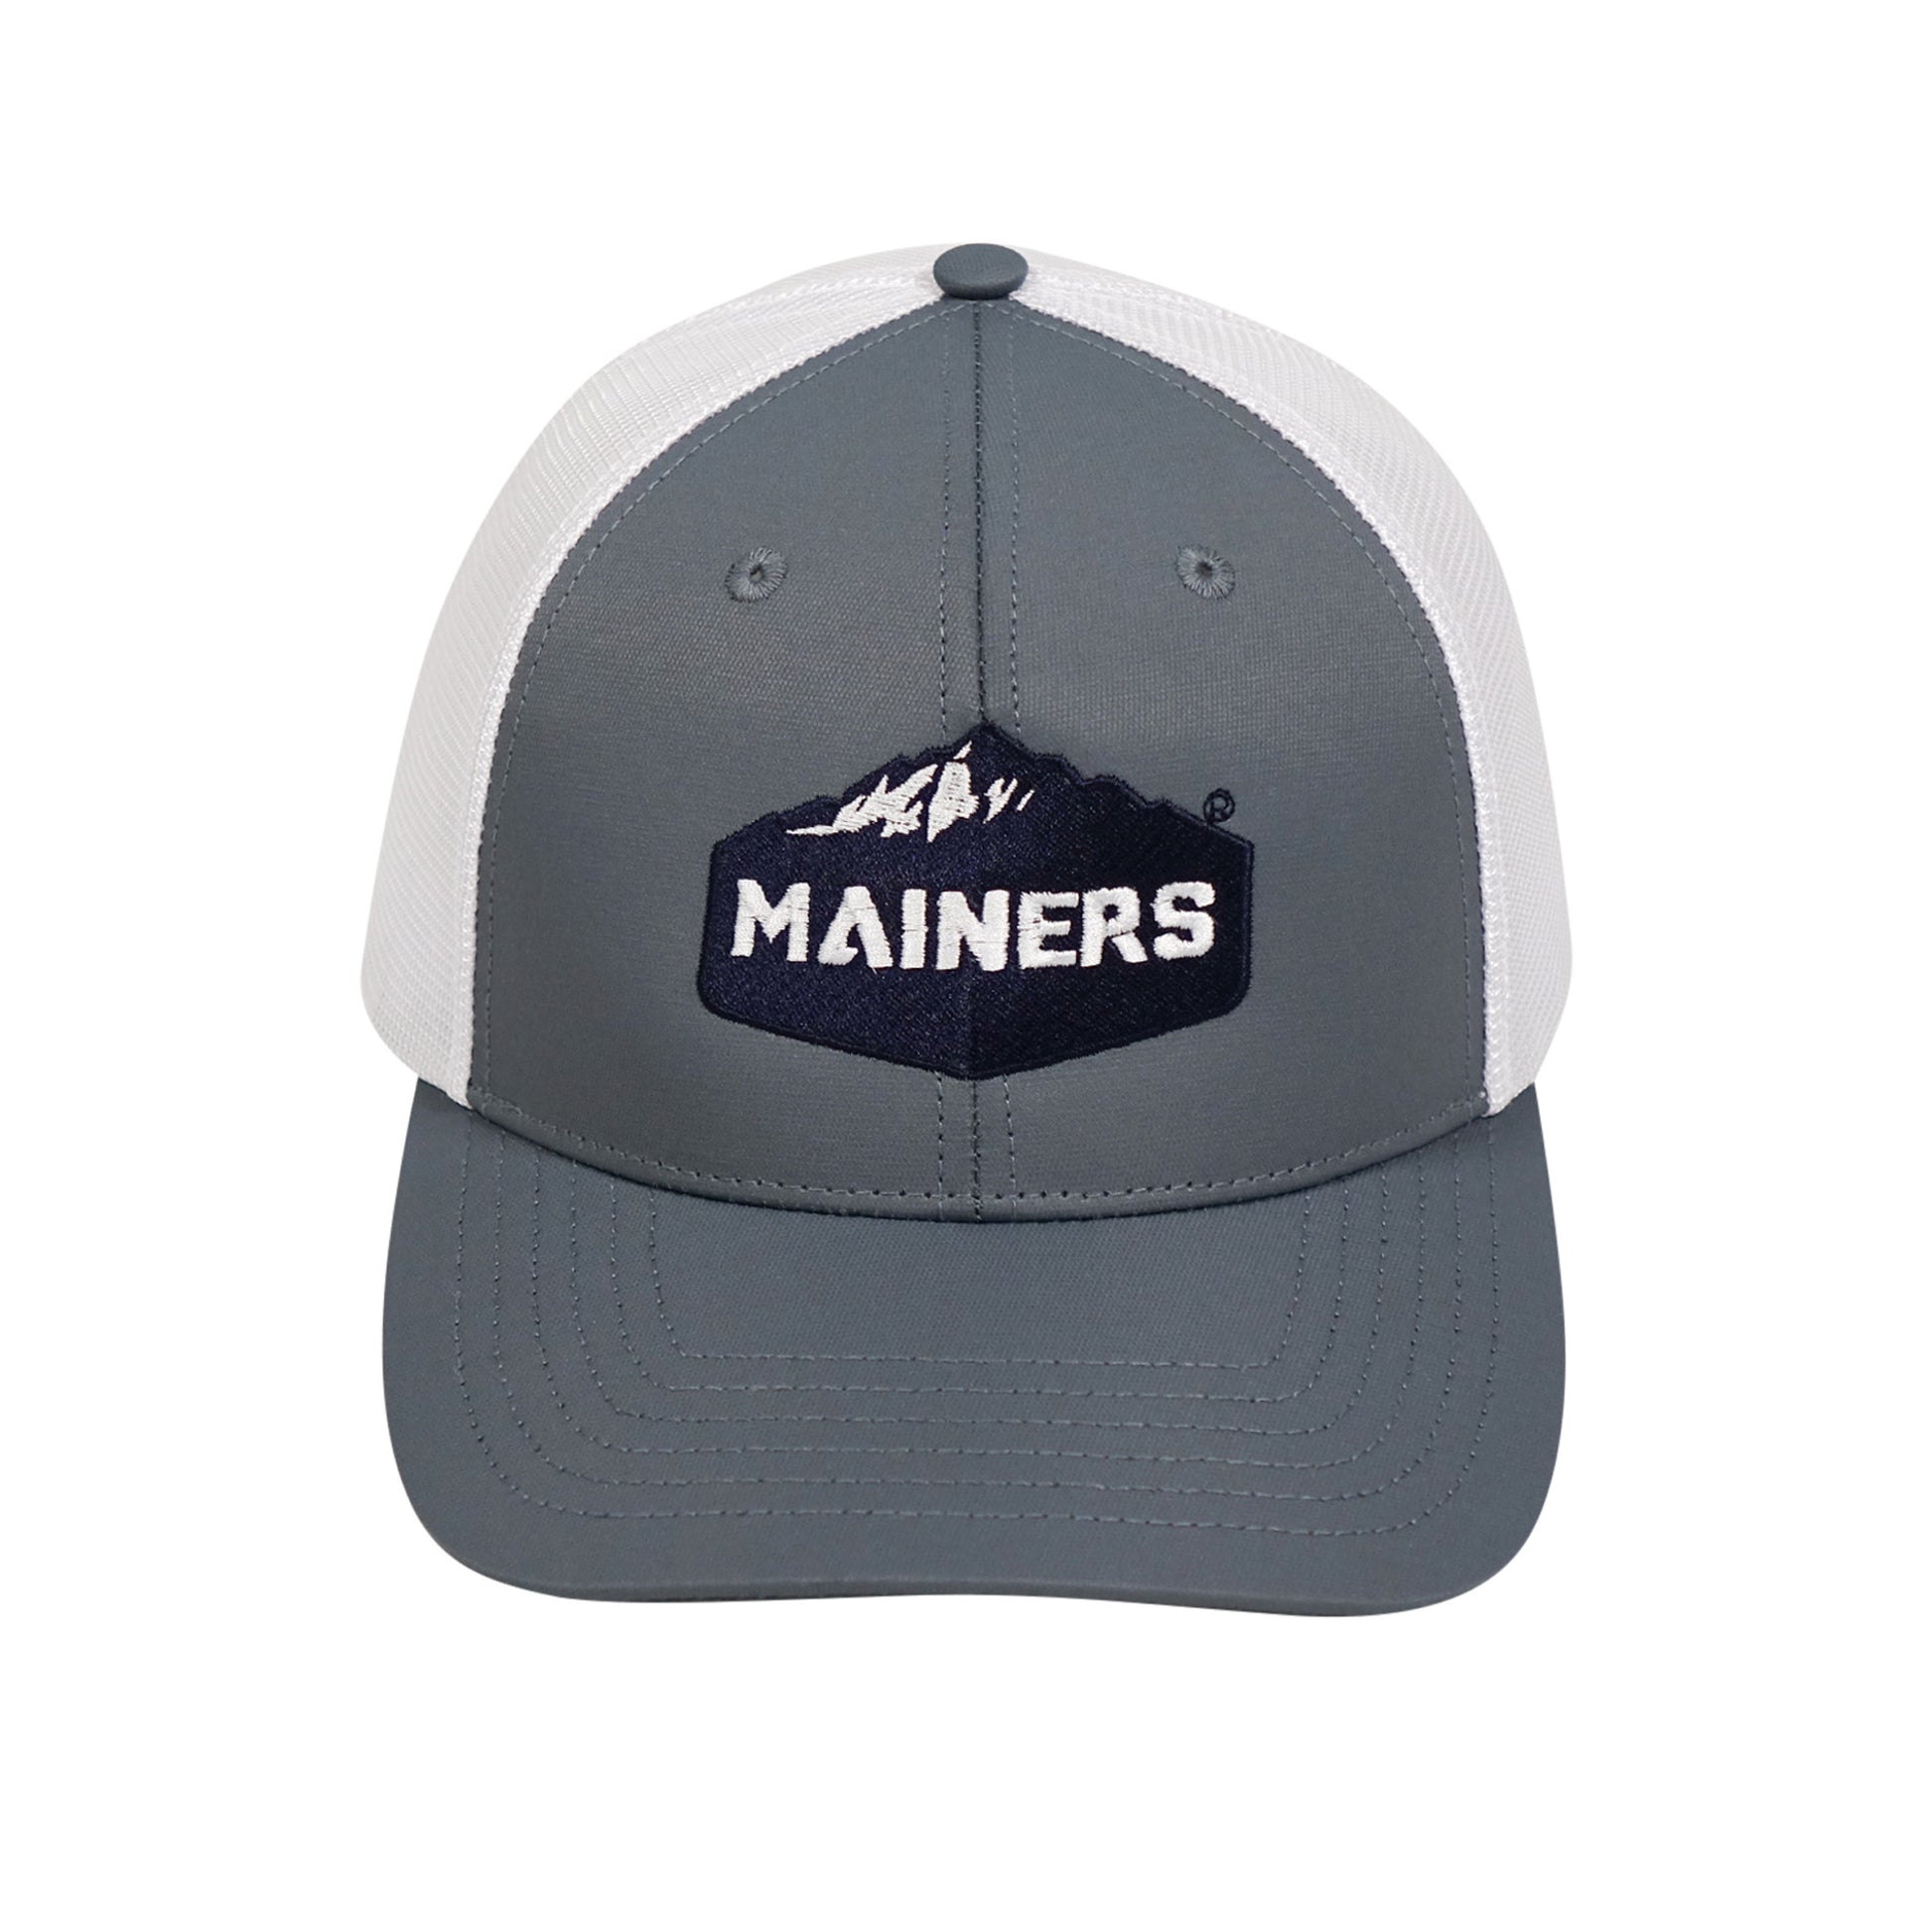 Mainers Trucker Hat